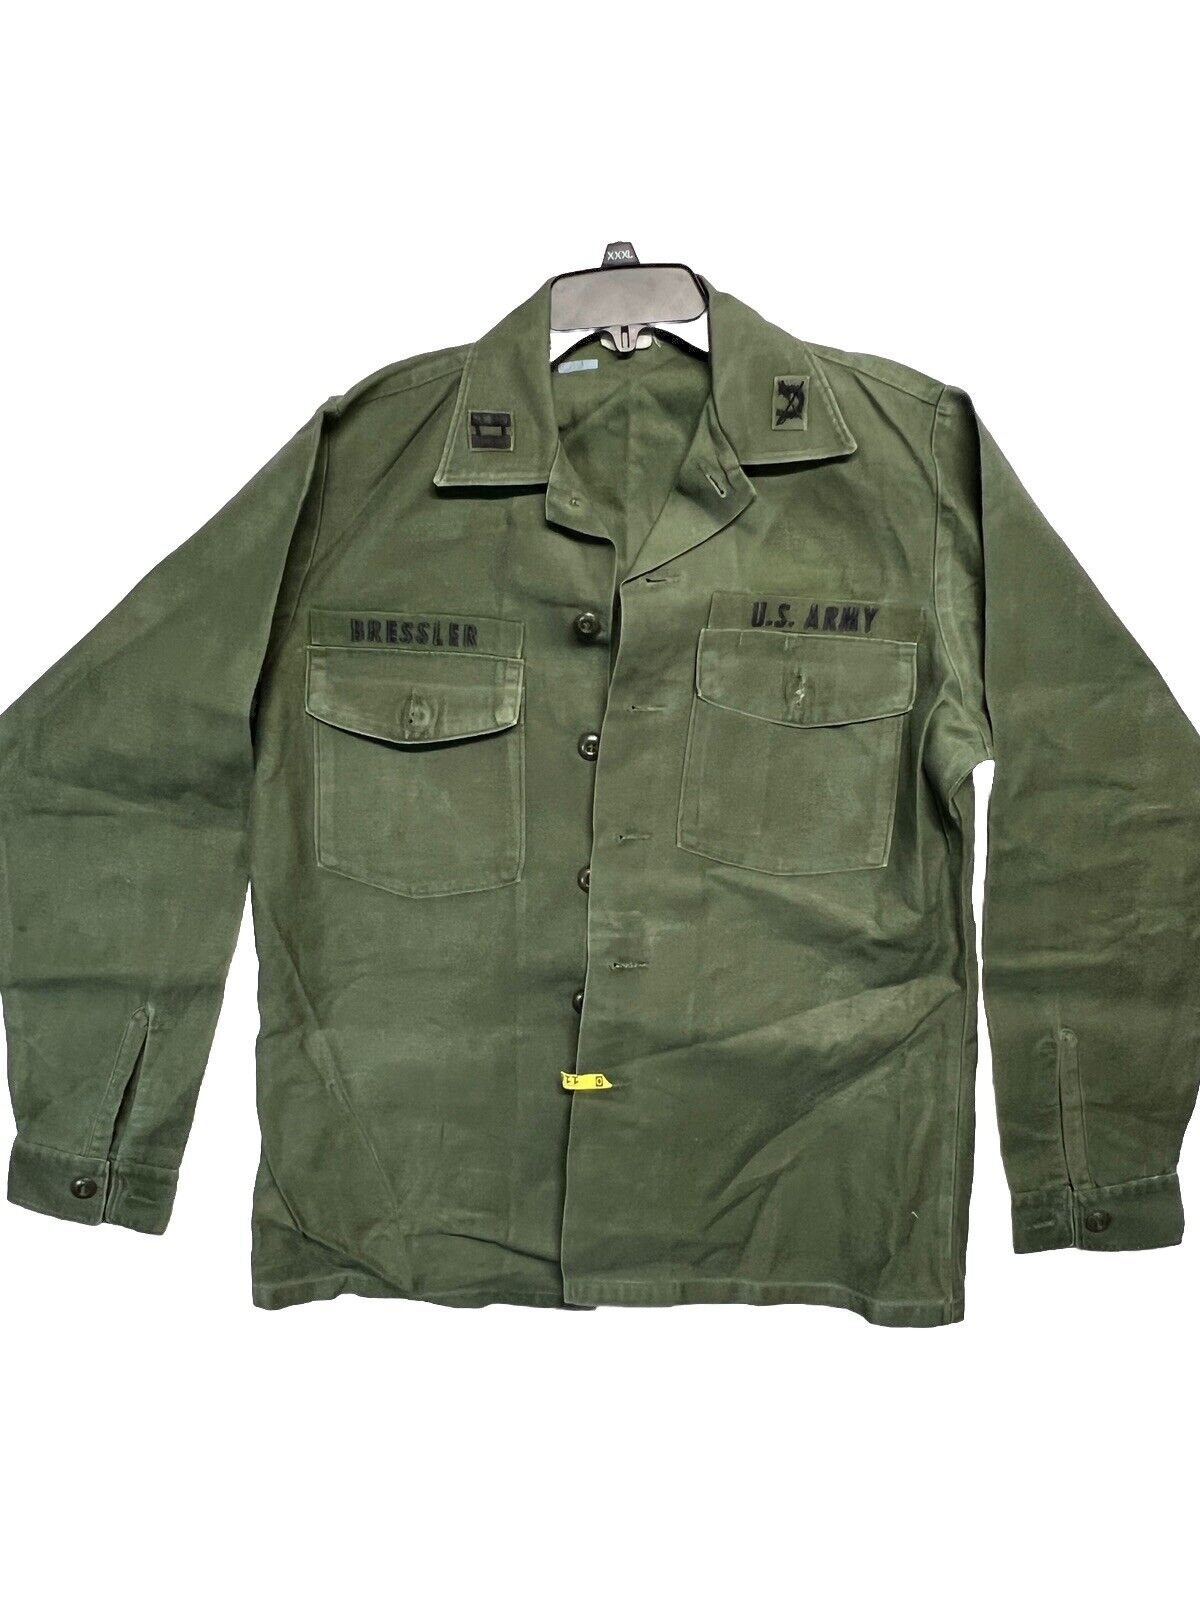 Vintage US Army Vietnam Military Jacket button shirt OG-107 Sateen Jungle Jacket